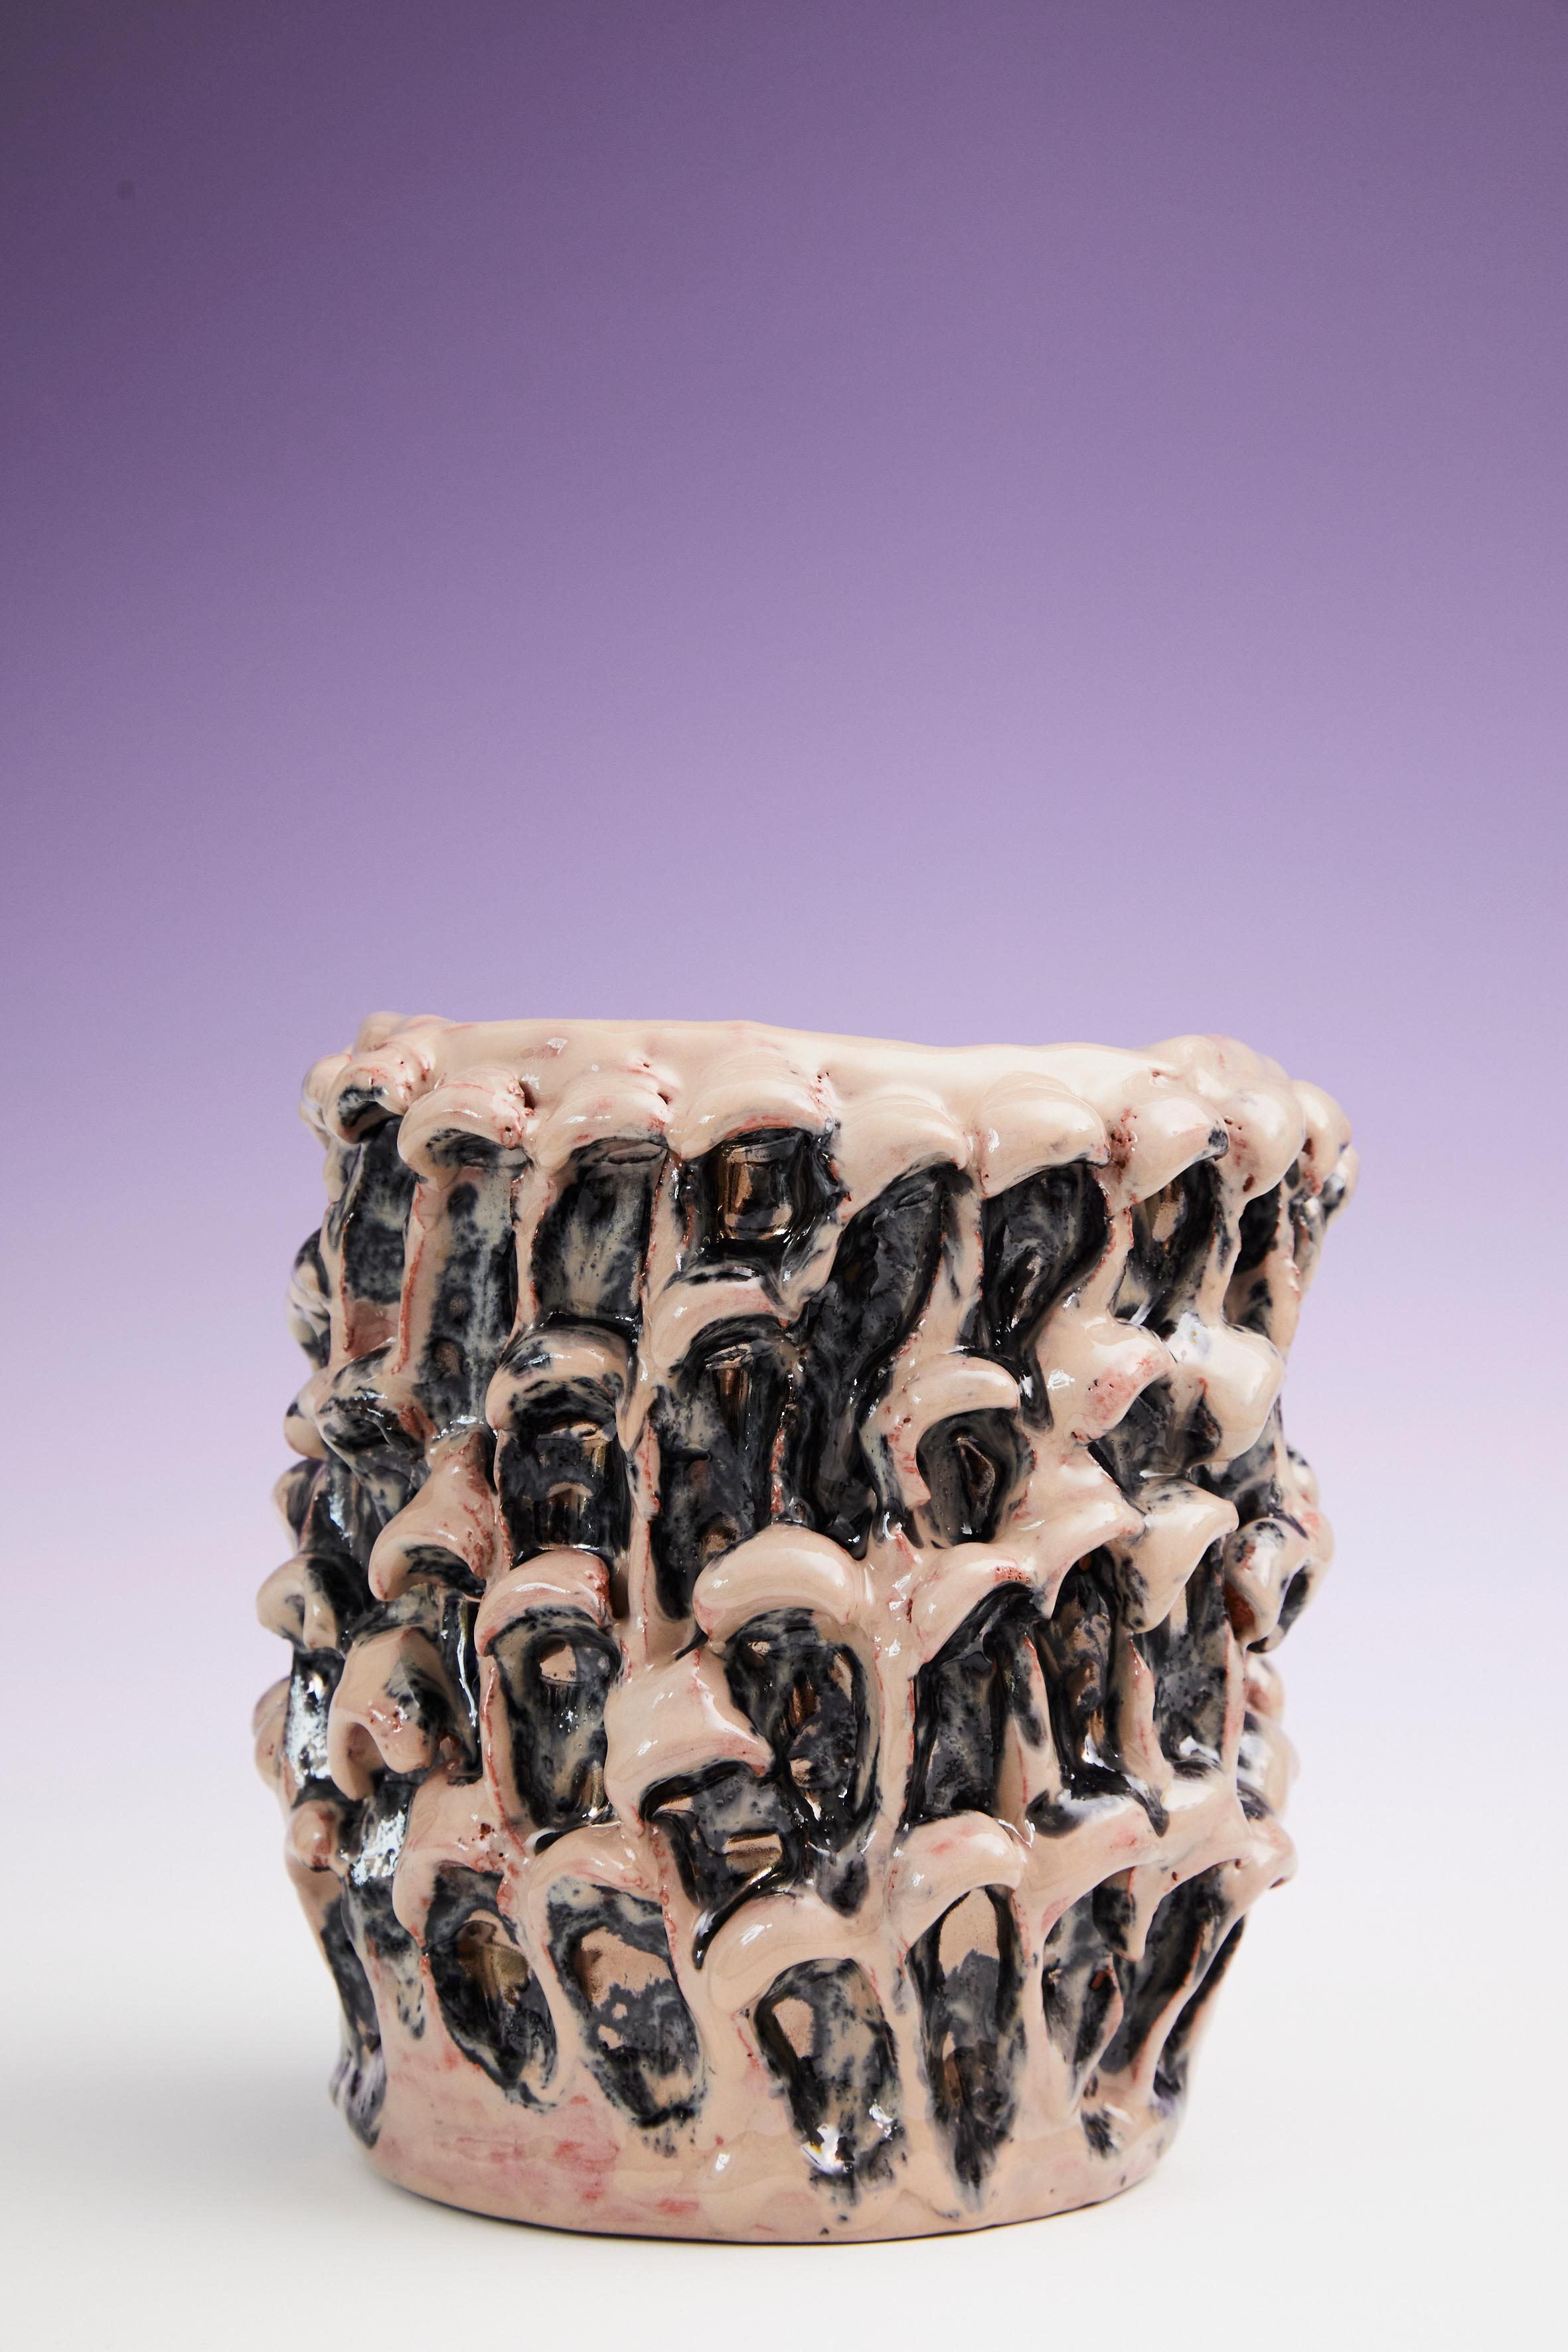 Onda vase in metallic mineral bush 01 / 20 numbered serie
Unique Handmade Piece
Glazed earthenware by Daria Dazzan
Earthenware, glazes
Measures: 17 X 21 cm ab.

Handmade earthenware vase by Daria Dazzan, unique piece, numbered.
Daria Dazzan